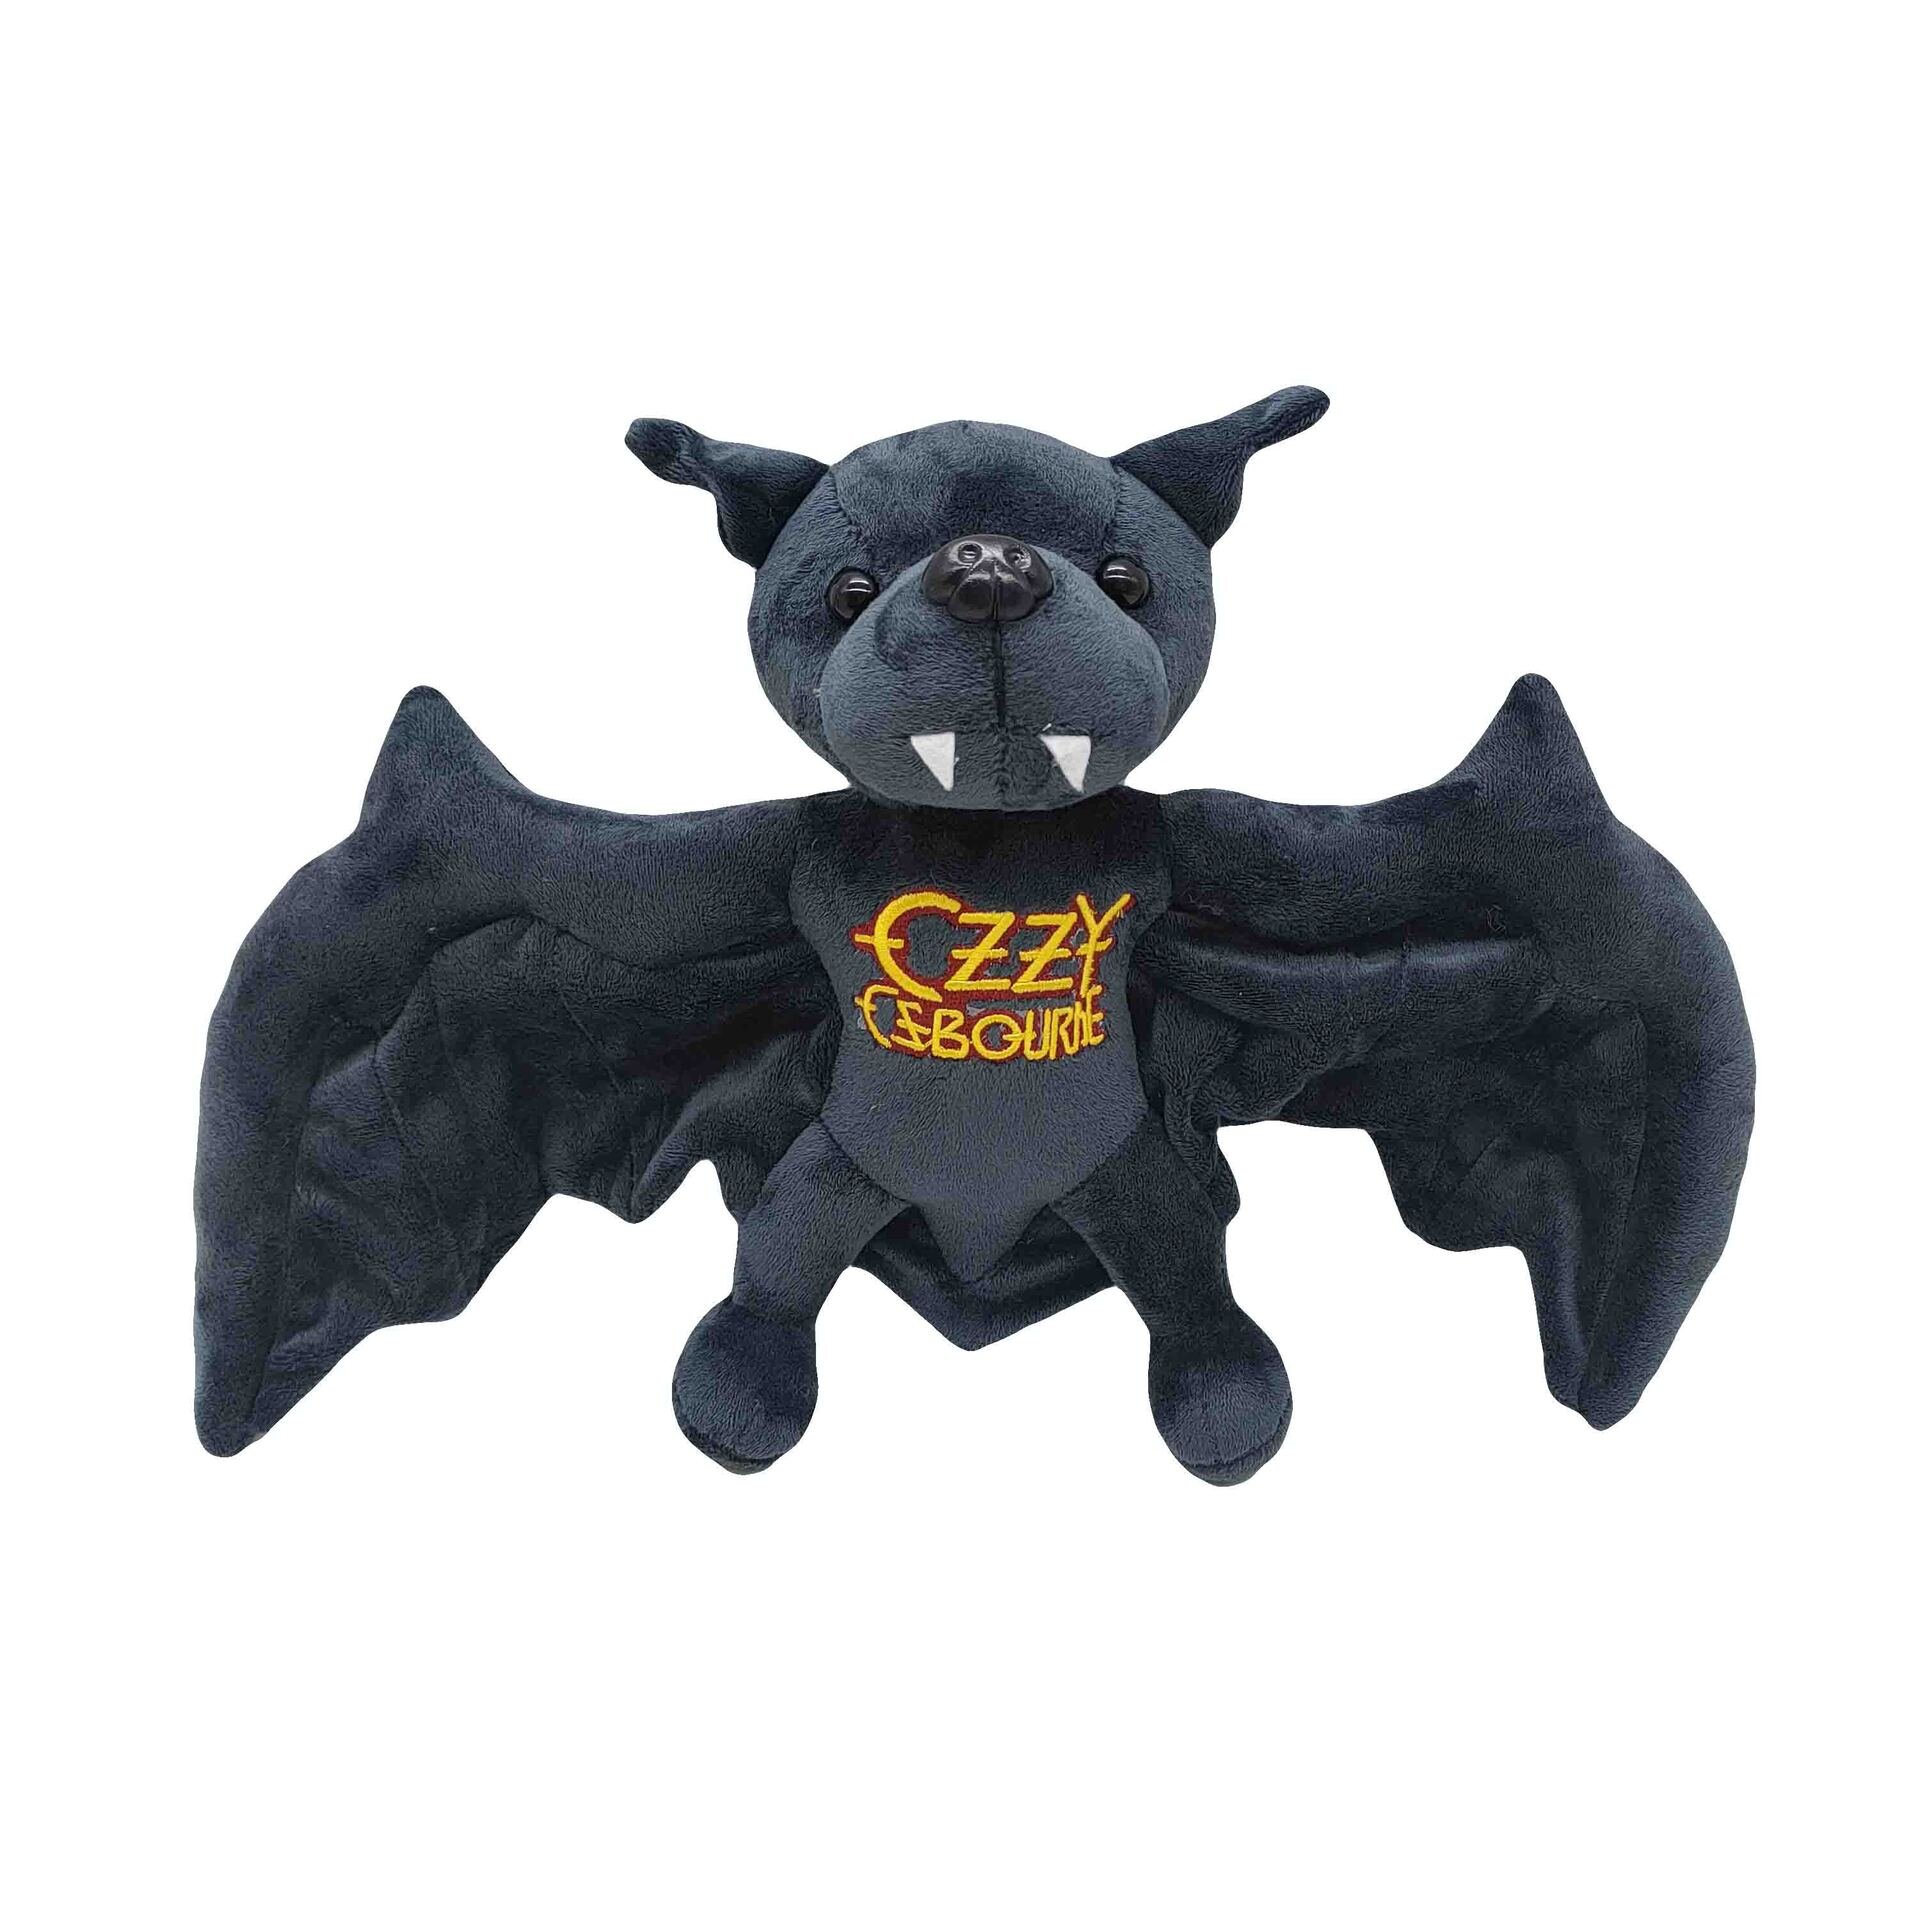 Ozzy Osbourne Bat Plush Doll 25CM Stuffed Animal Toys Kids Boys Girls